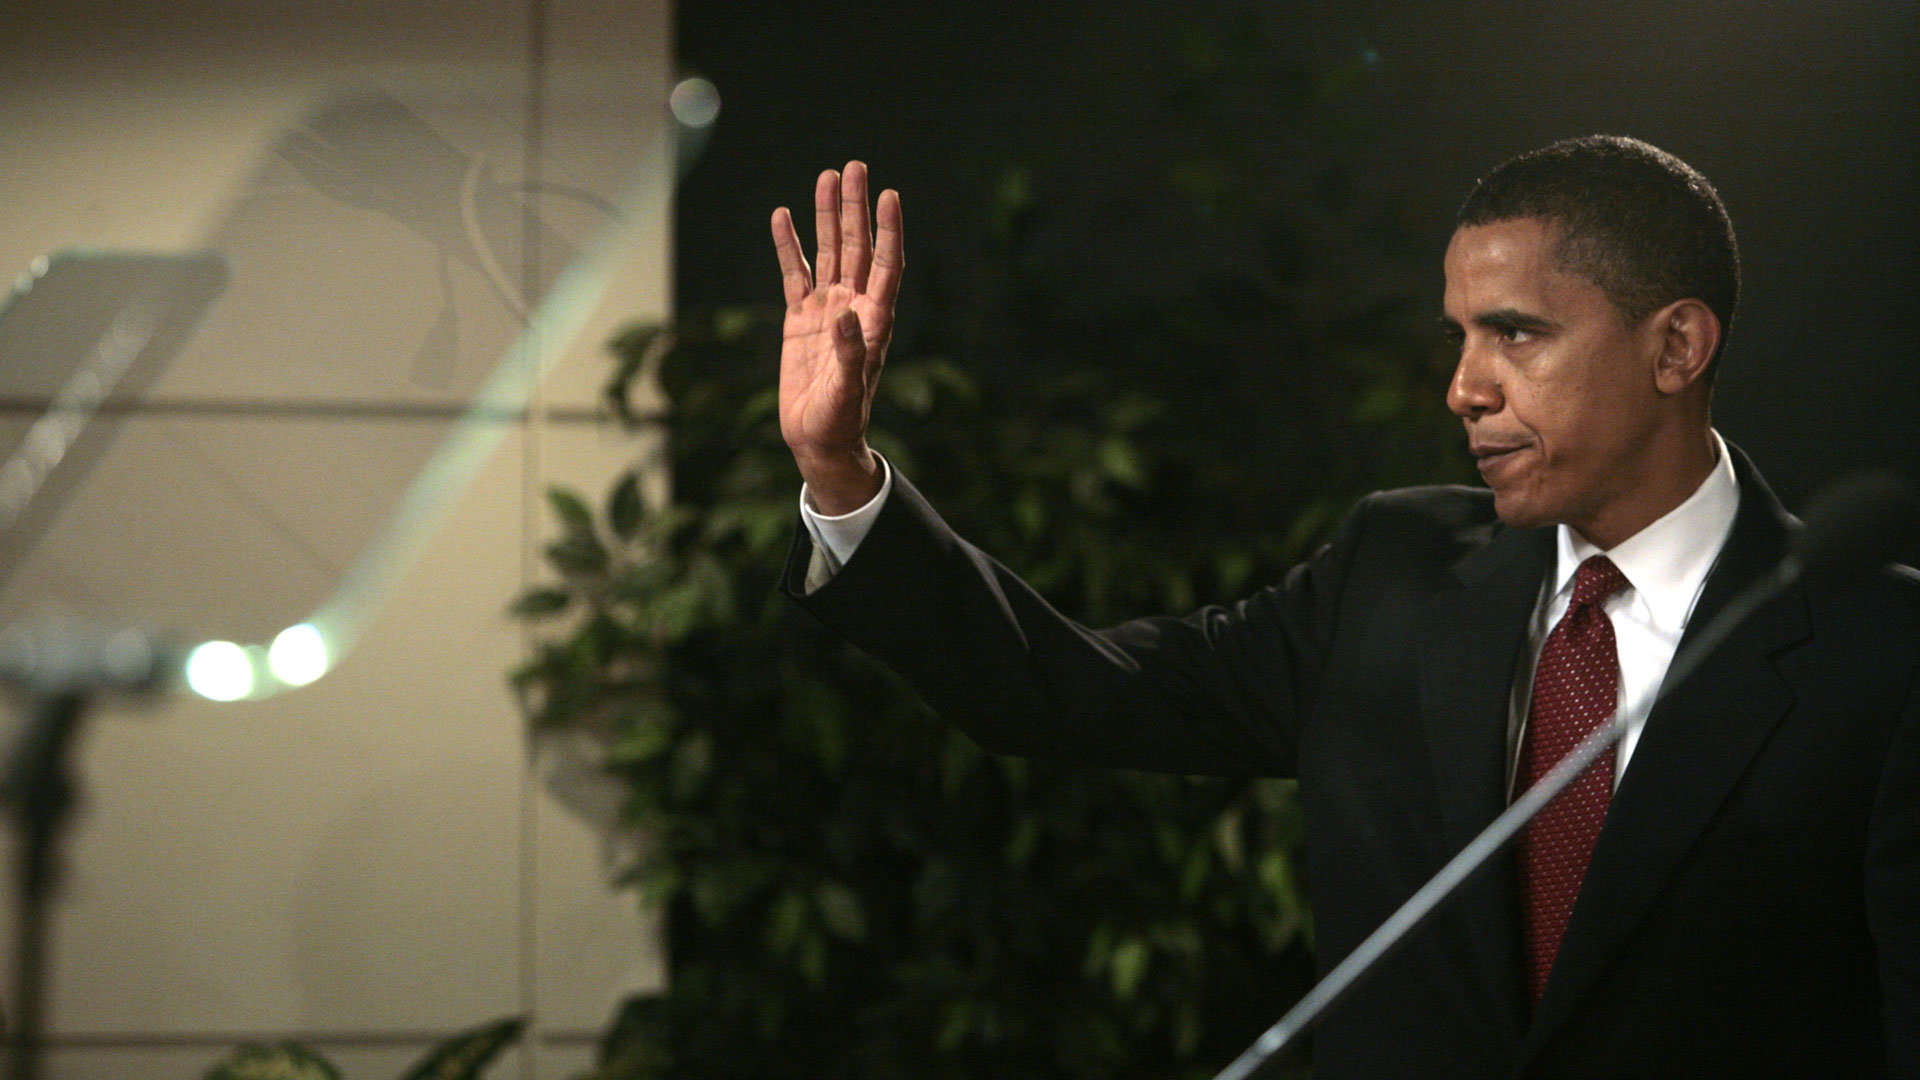 Barack Obama Giving A Speech 738671 Jpg